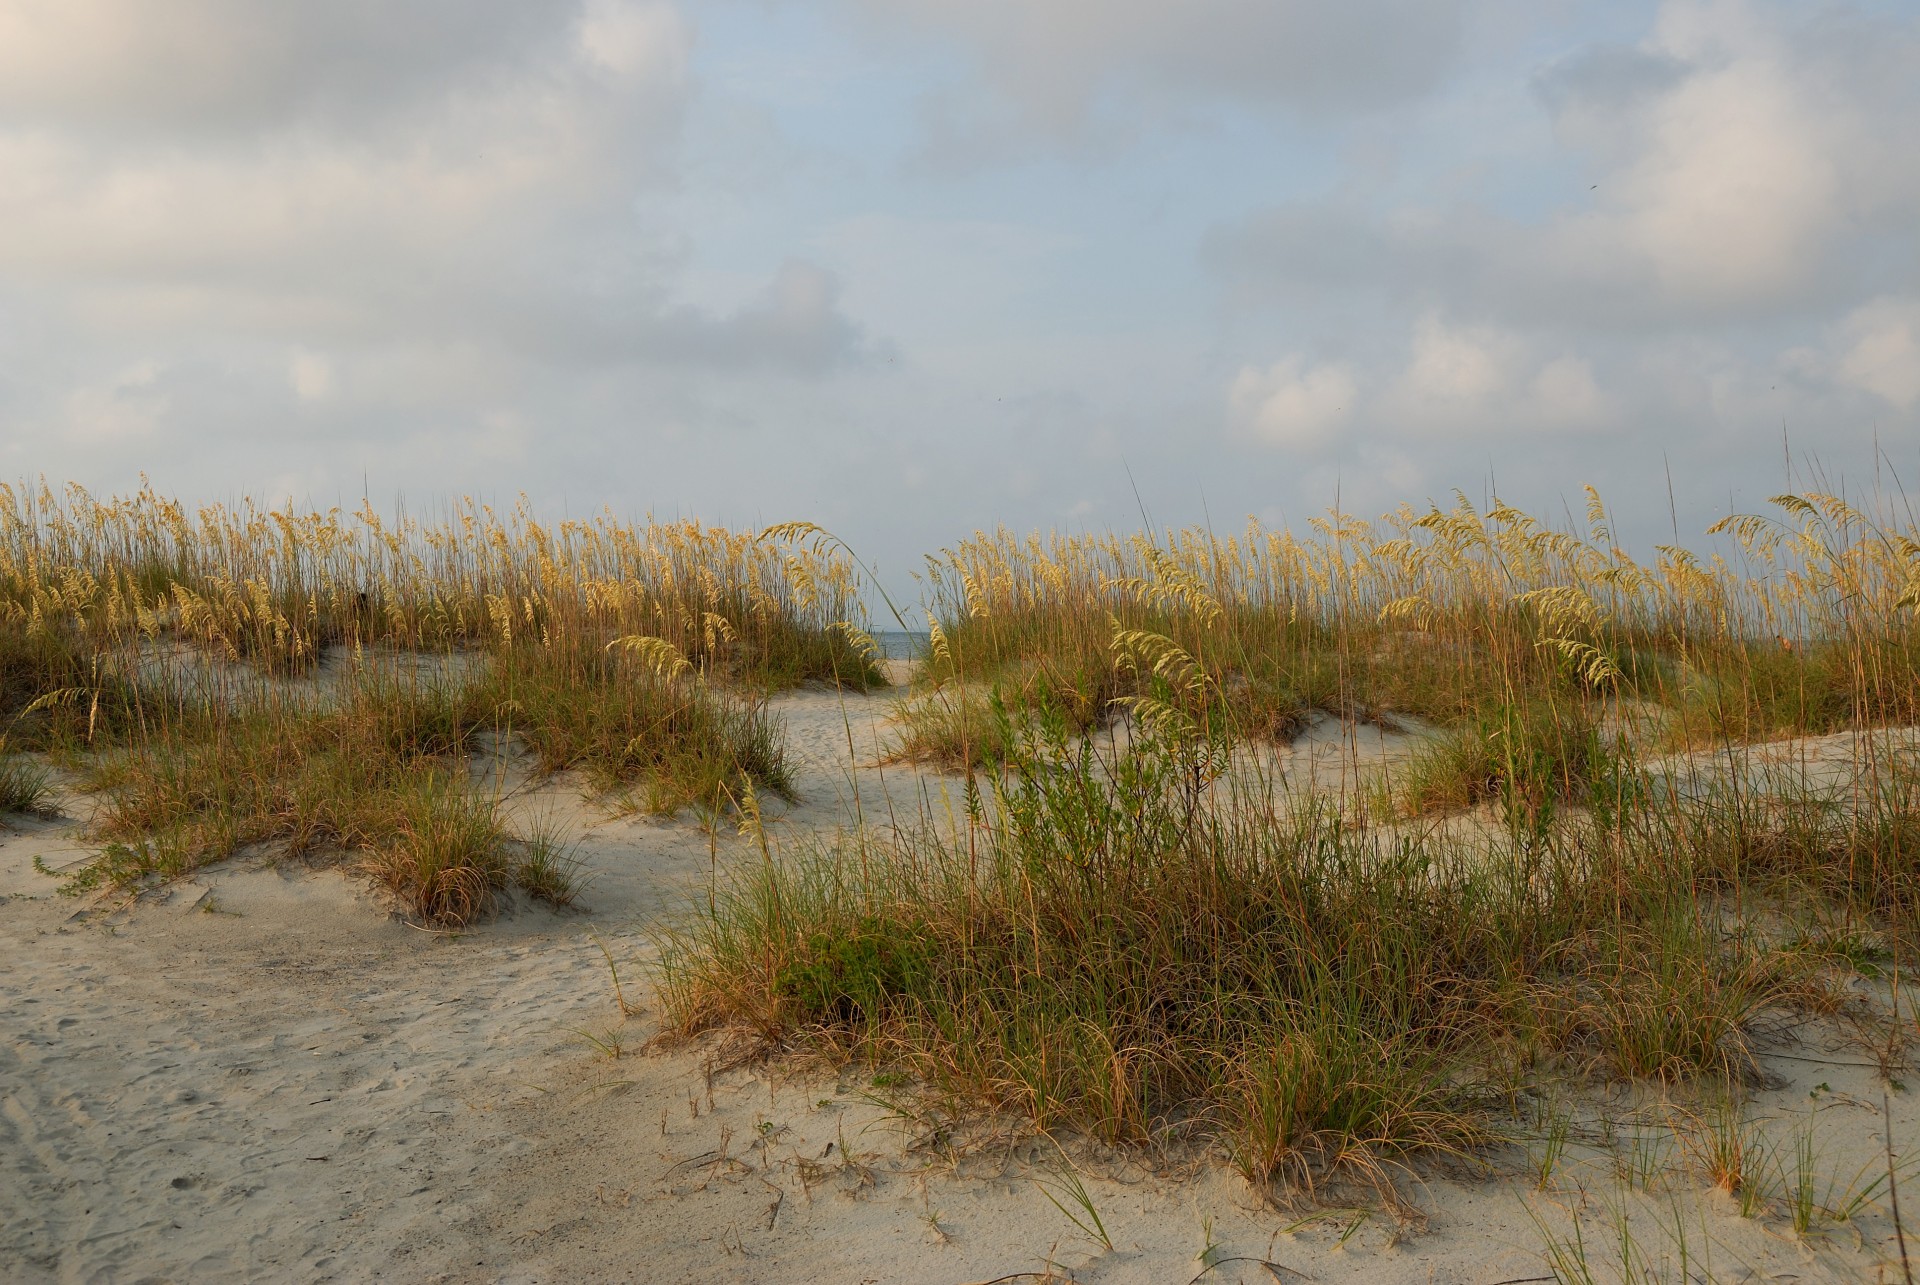 Sea Oats on the sand dunes